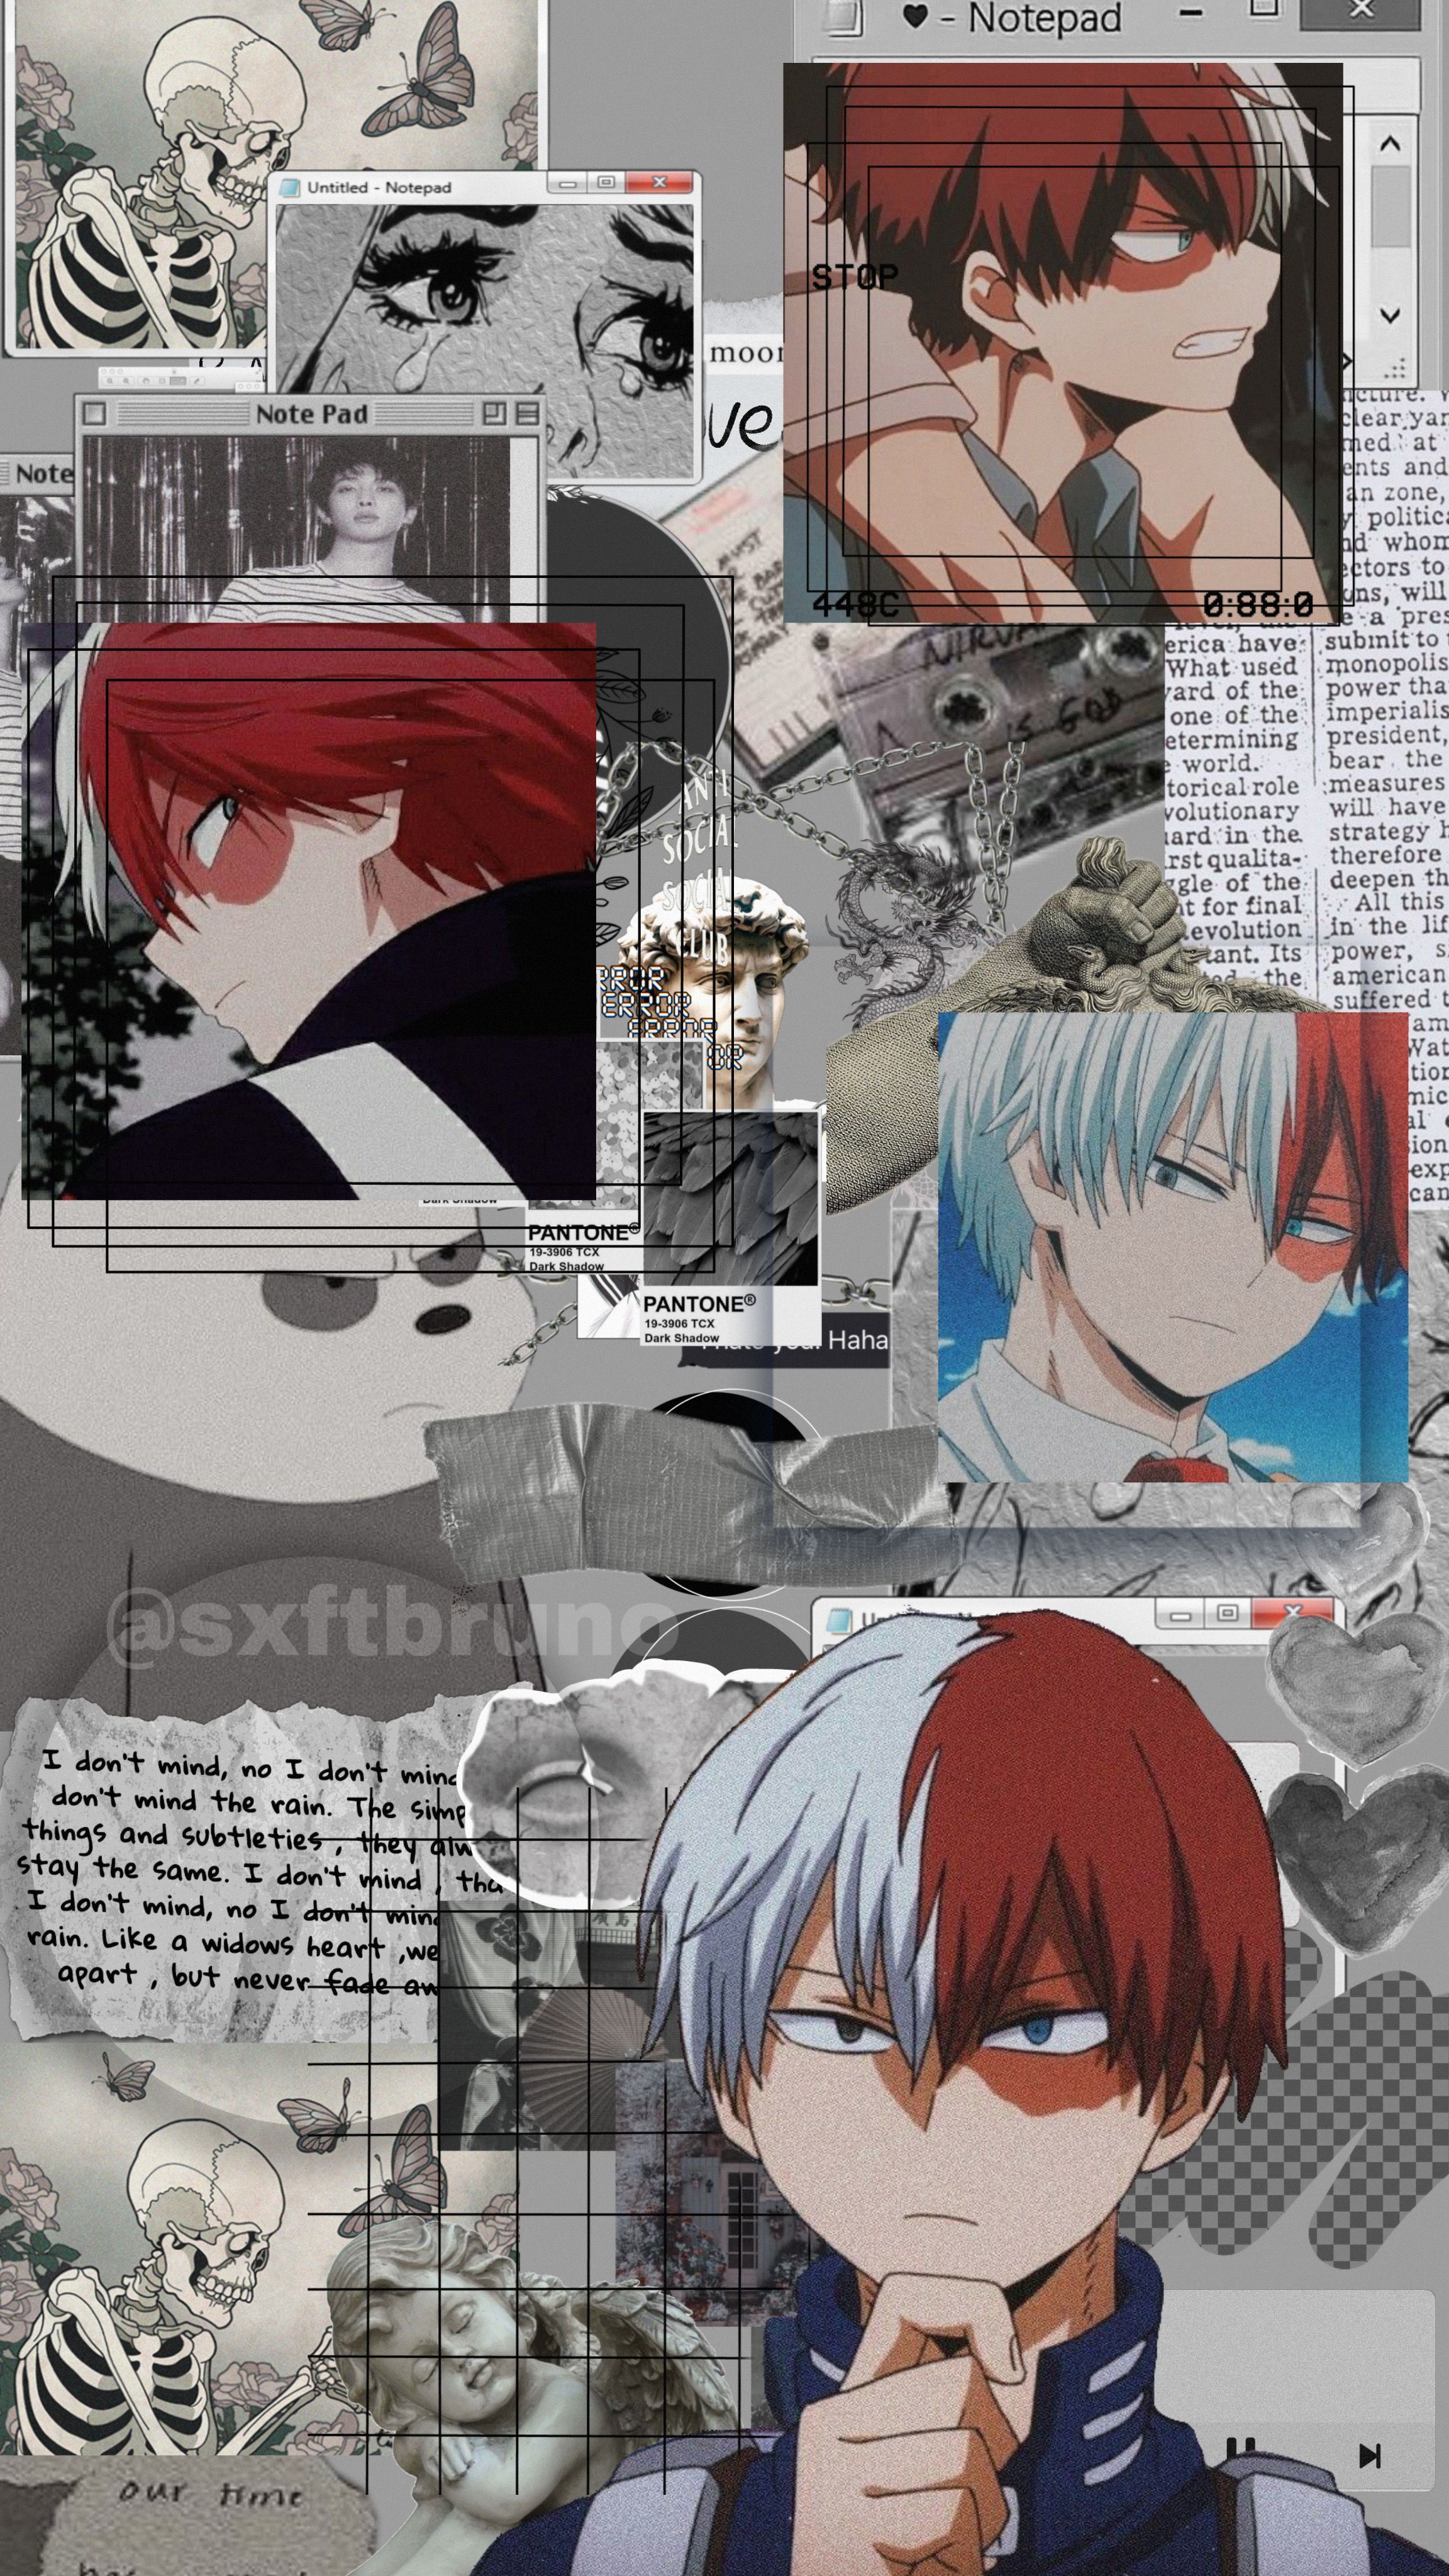 Anime background wallpaper .com